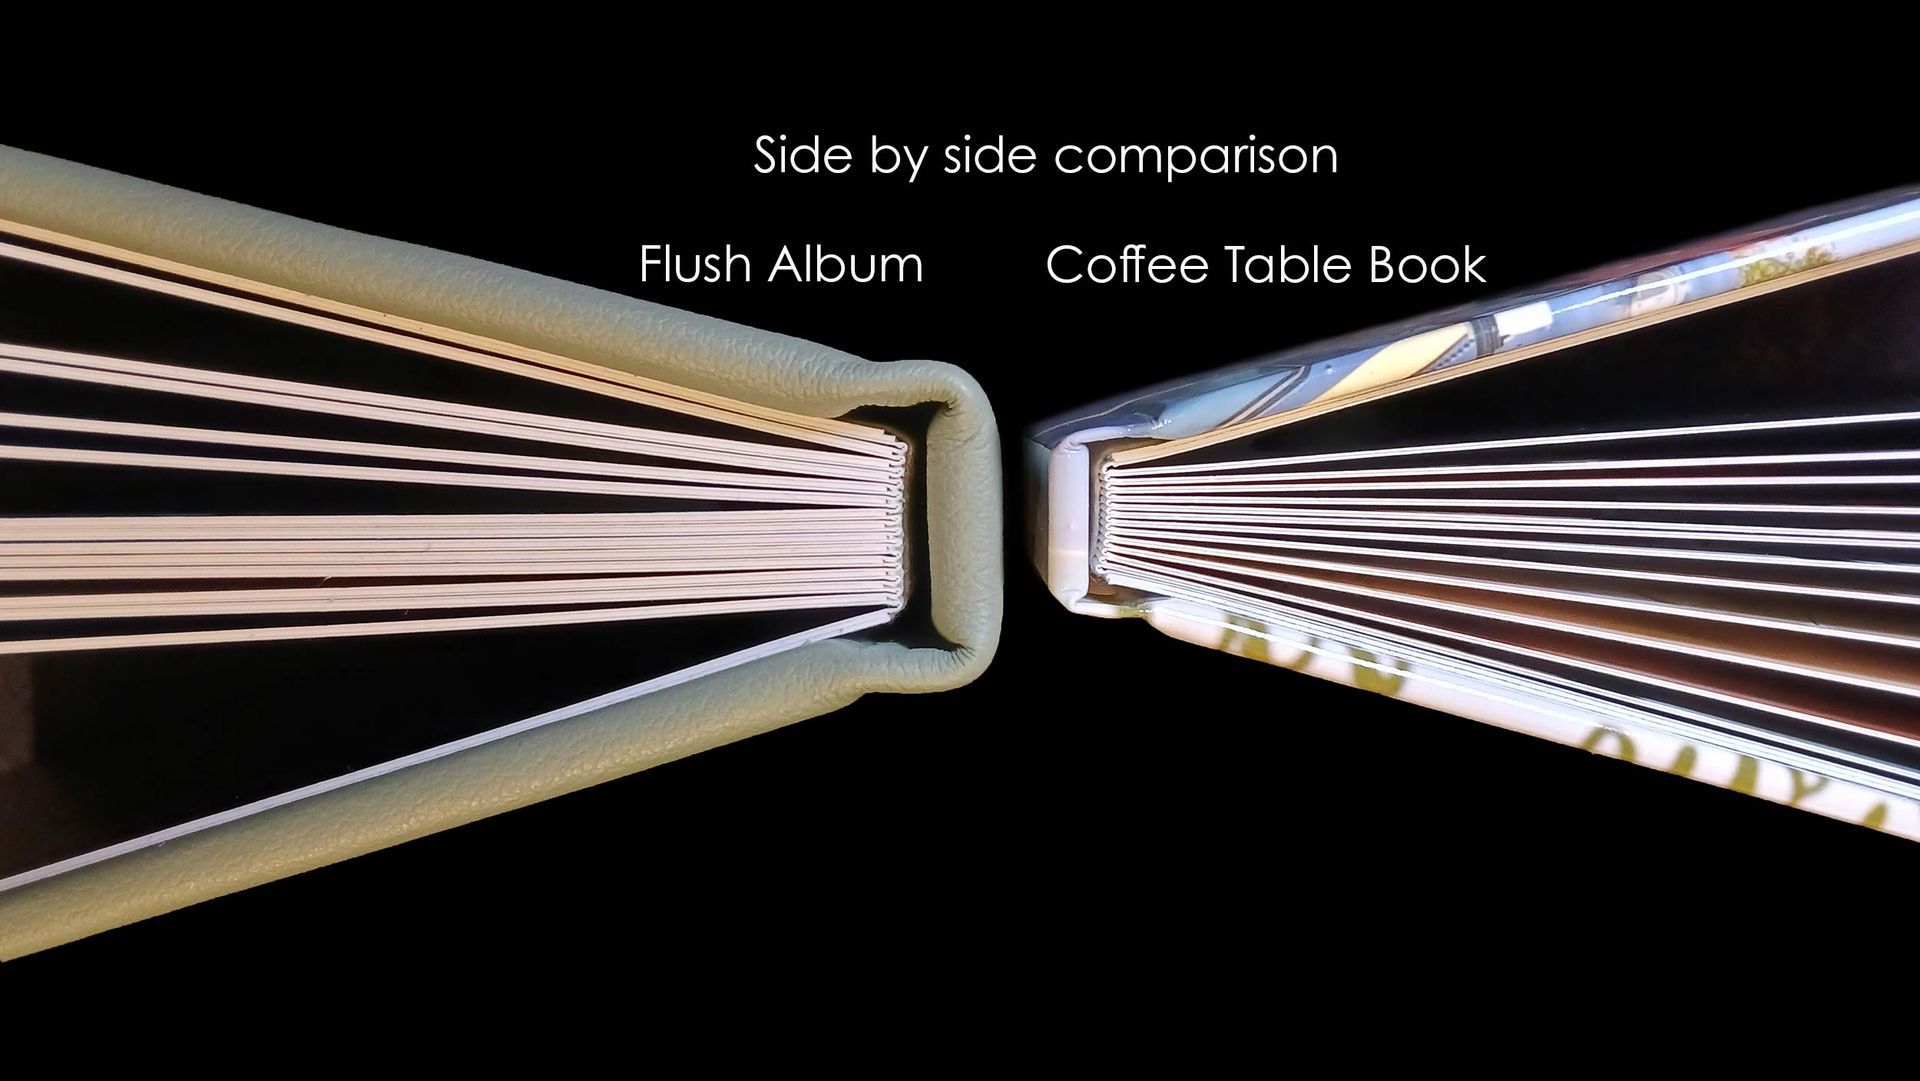 flush album and coffee table book binding comparison